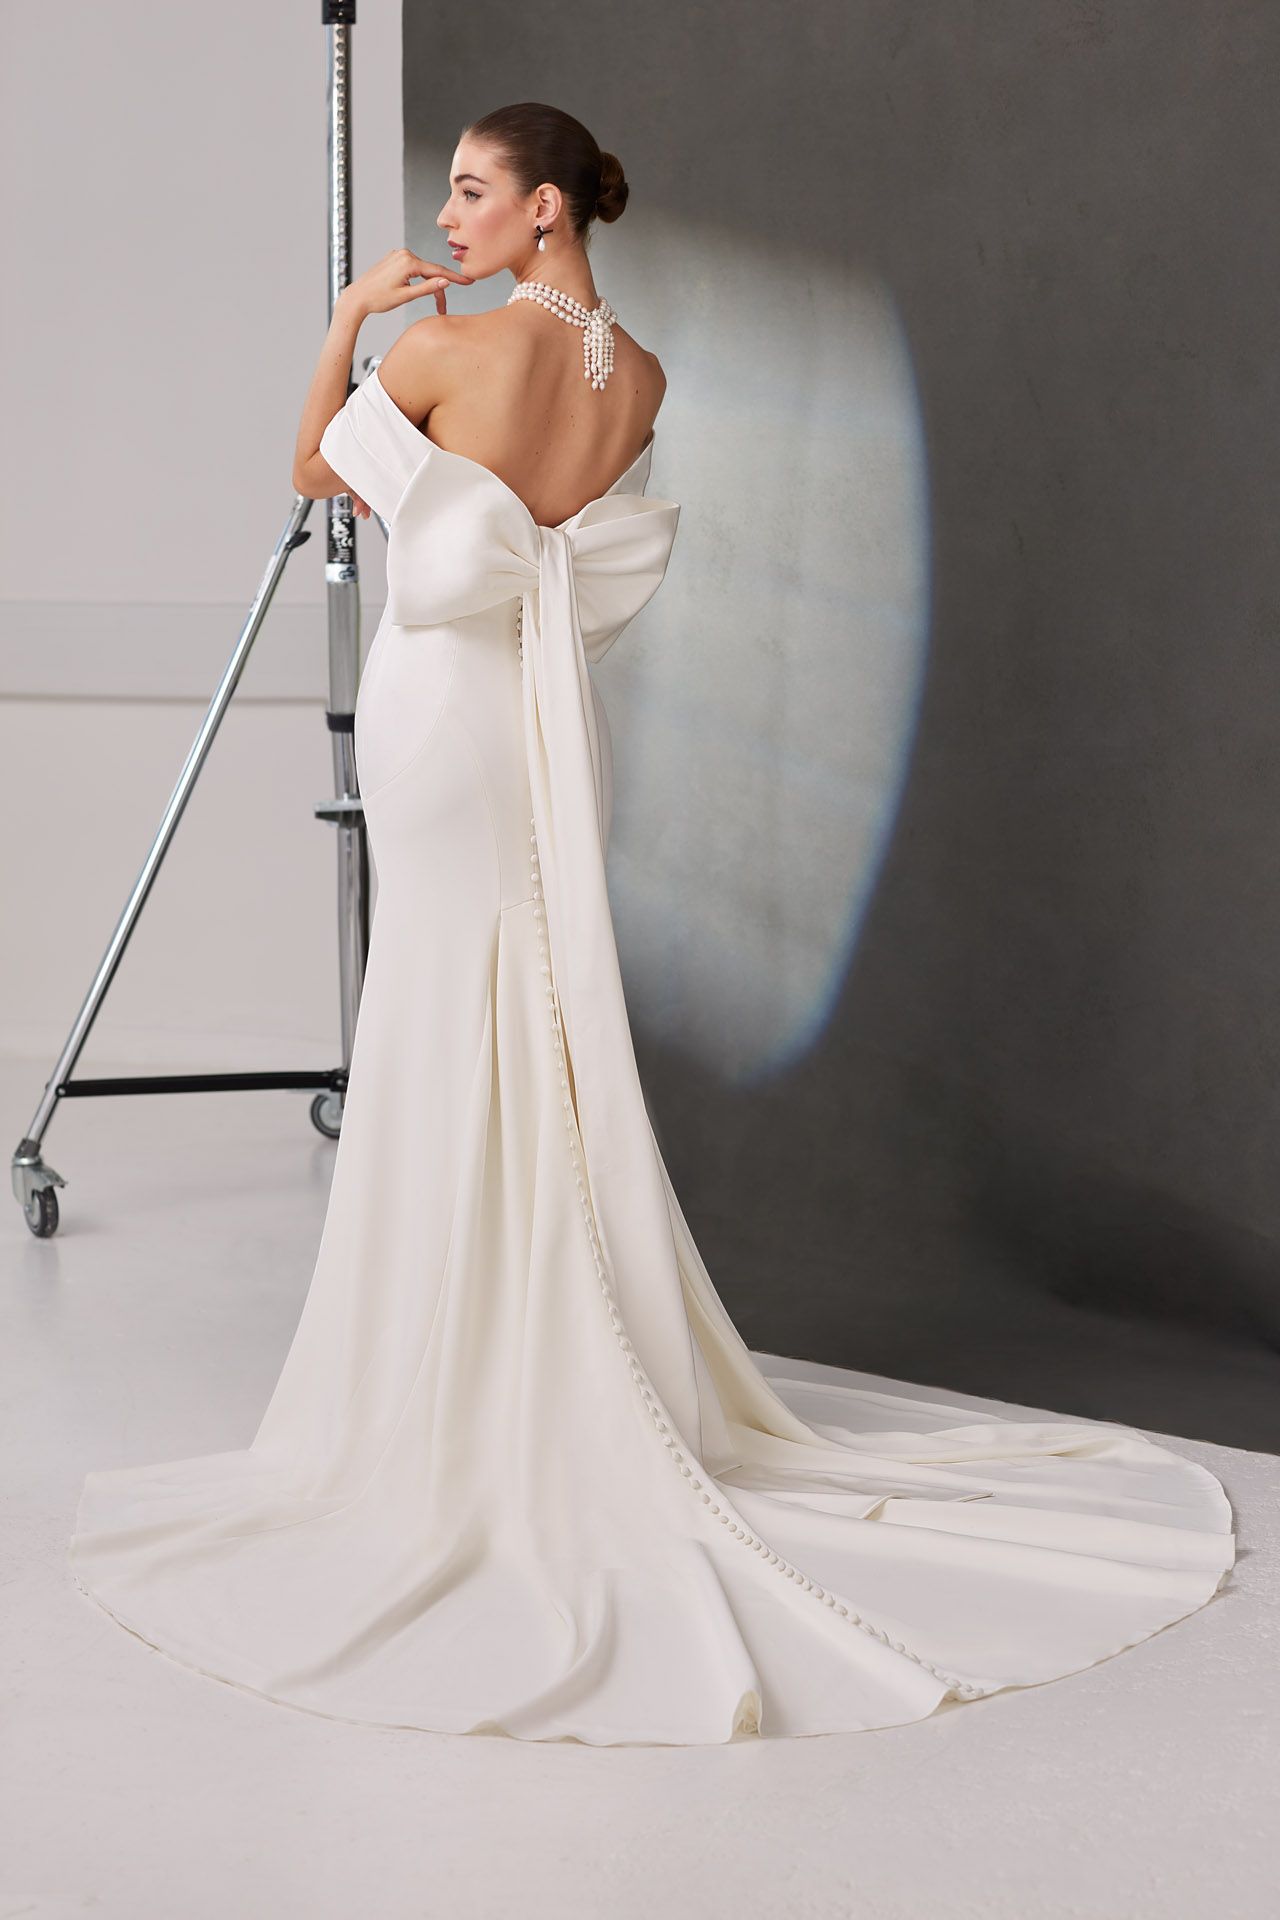 image of model showing wedding dress - The Wedding Centre, Hemel Hempstead